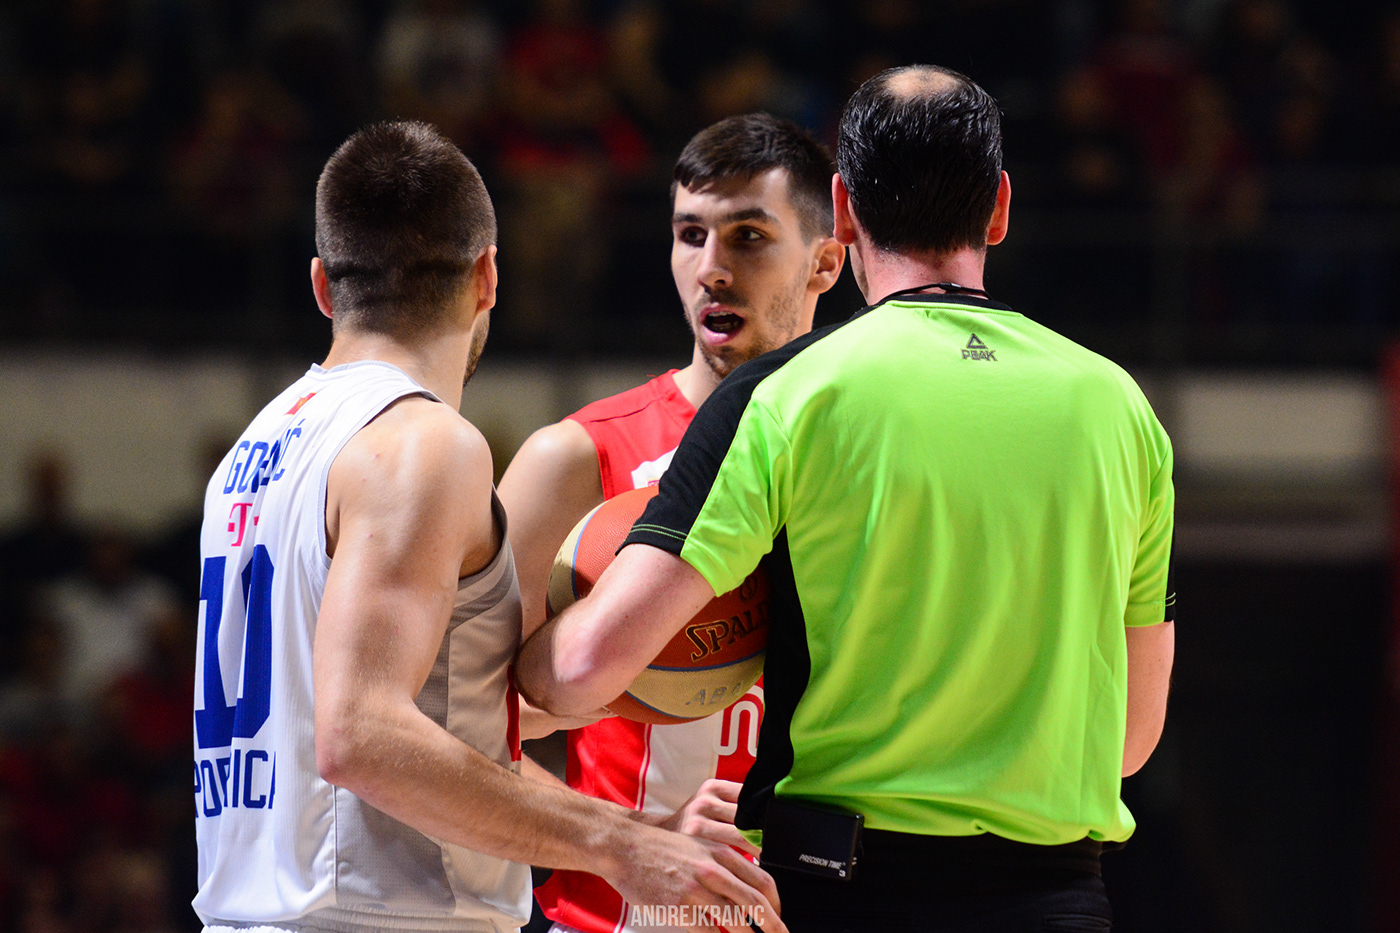 crvena zvezda belgrade Serbia Europe montenegro basketball photo Photography  sportphotography Picture